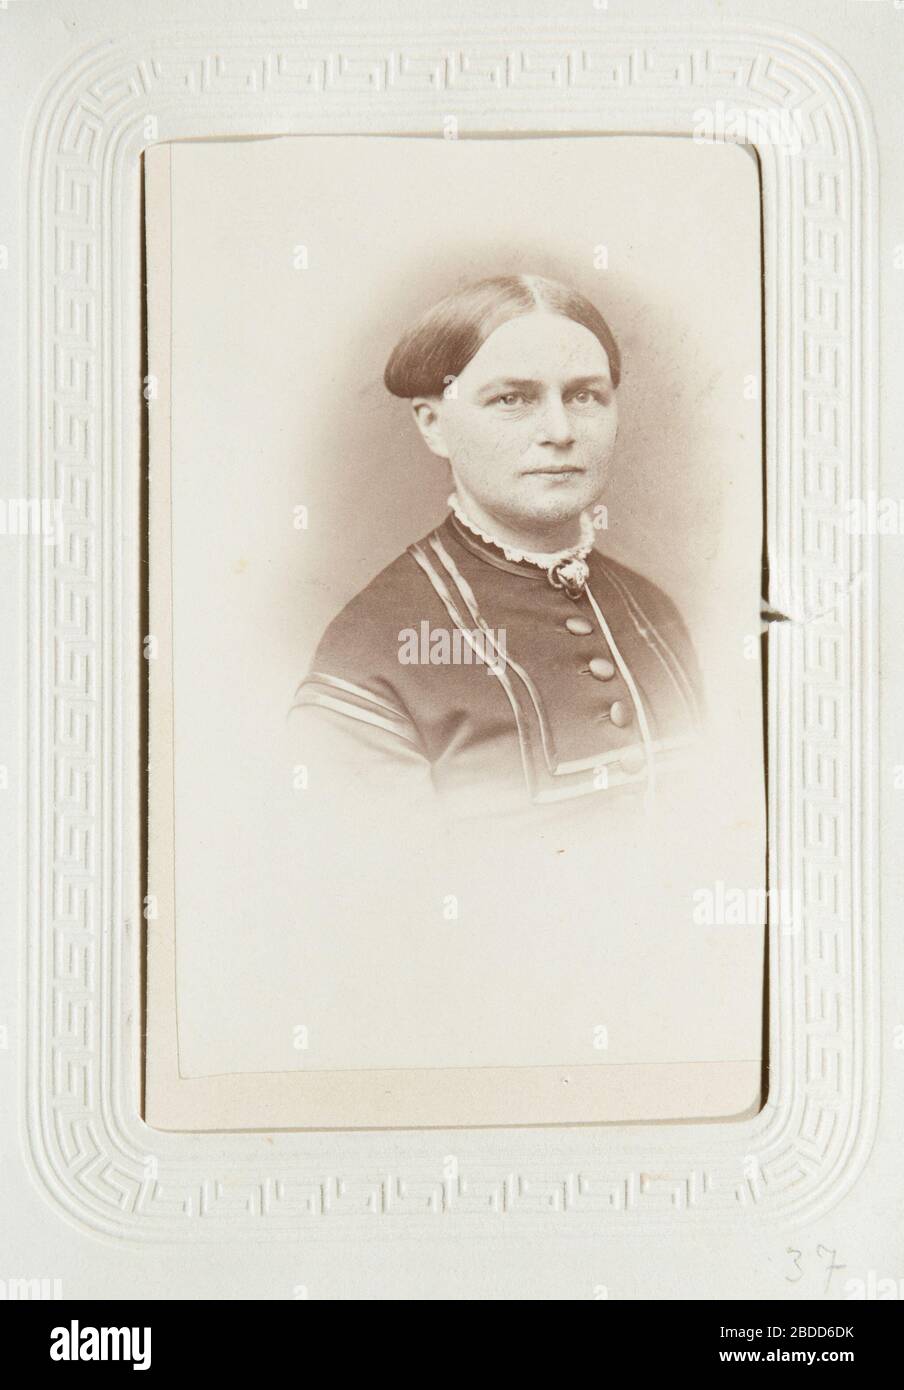 'Fotografiporträtt; Depicted person:  Caroline Pflaum (Guvernant, sällskapsdam, 1816-1909) Nürnberg - Södertälje, Tyskland - Sverige  Fotografiporträtt på Caroline Pflaum, 1860-tal.; 1860s date QS:P571,+1860-00-00T00:00:00Z/8; LSH 107615 (hm dig18814); ' Stock Photo